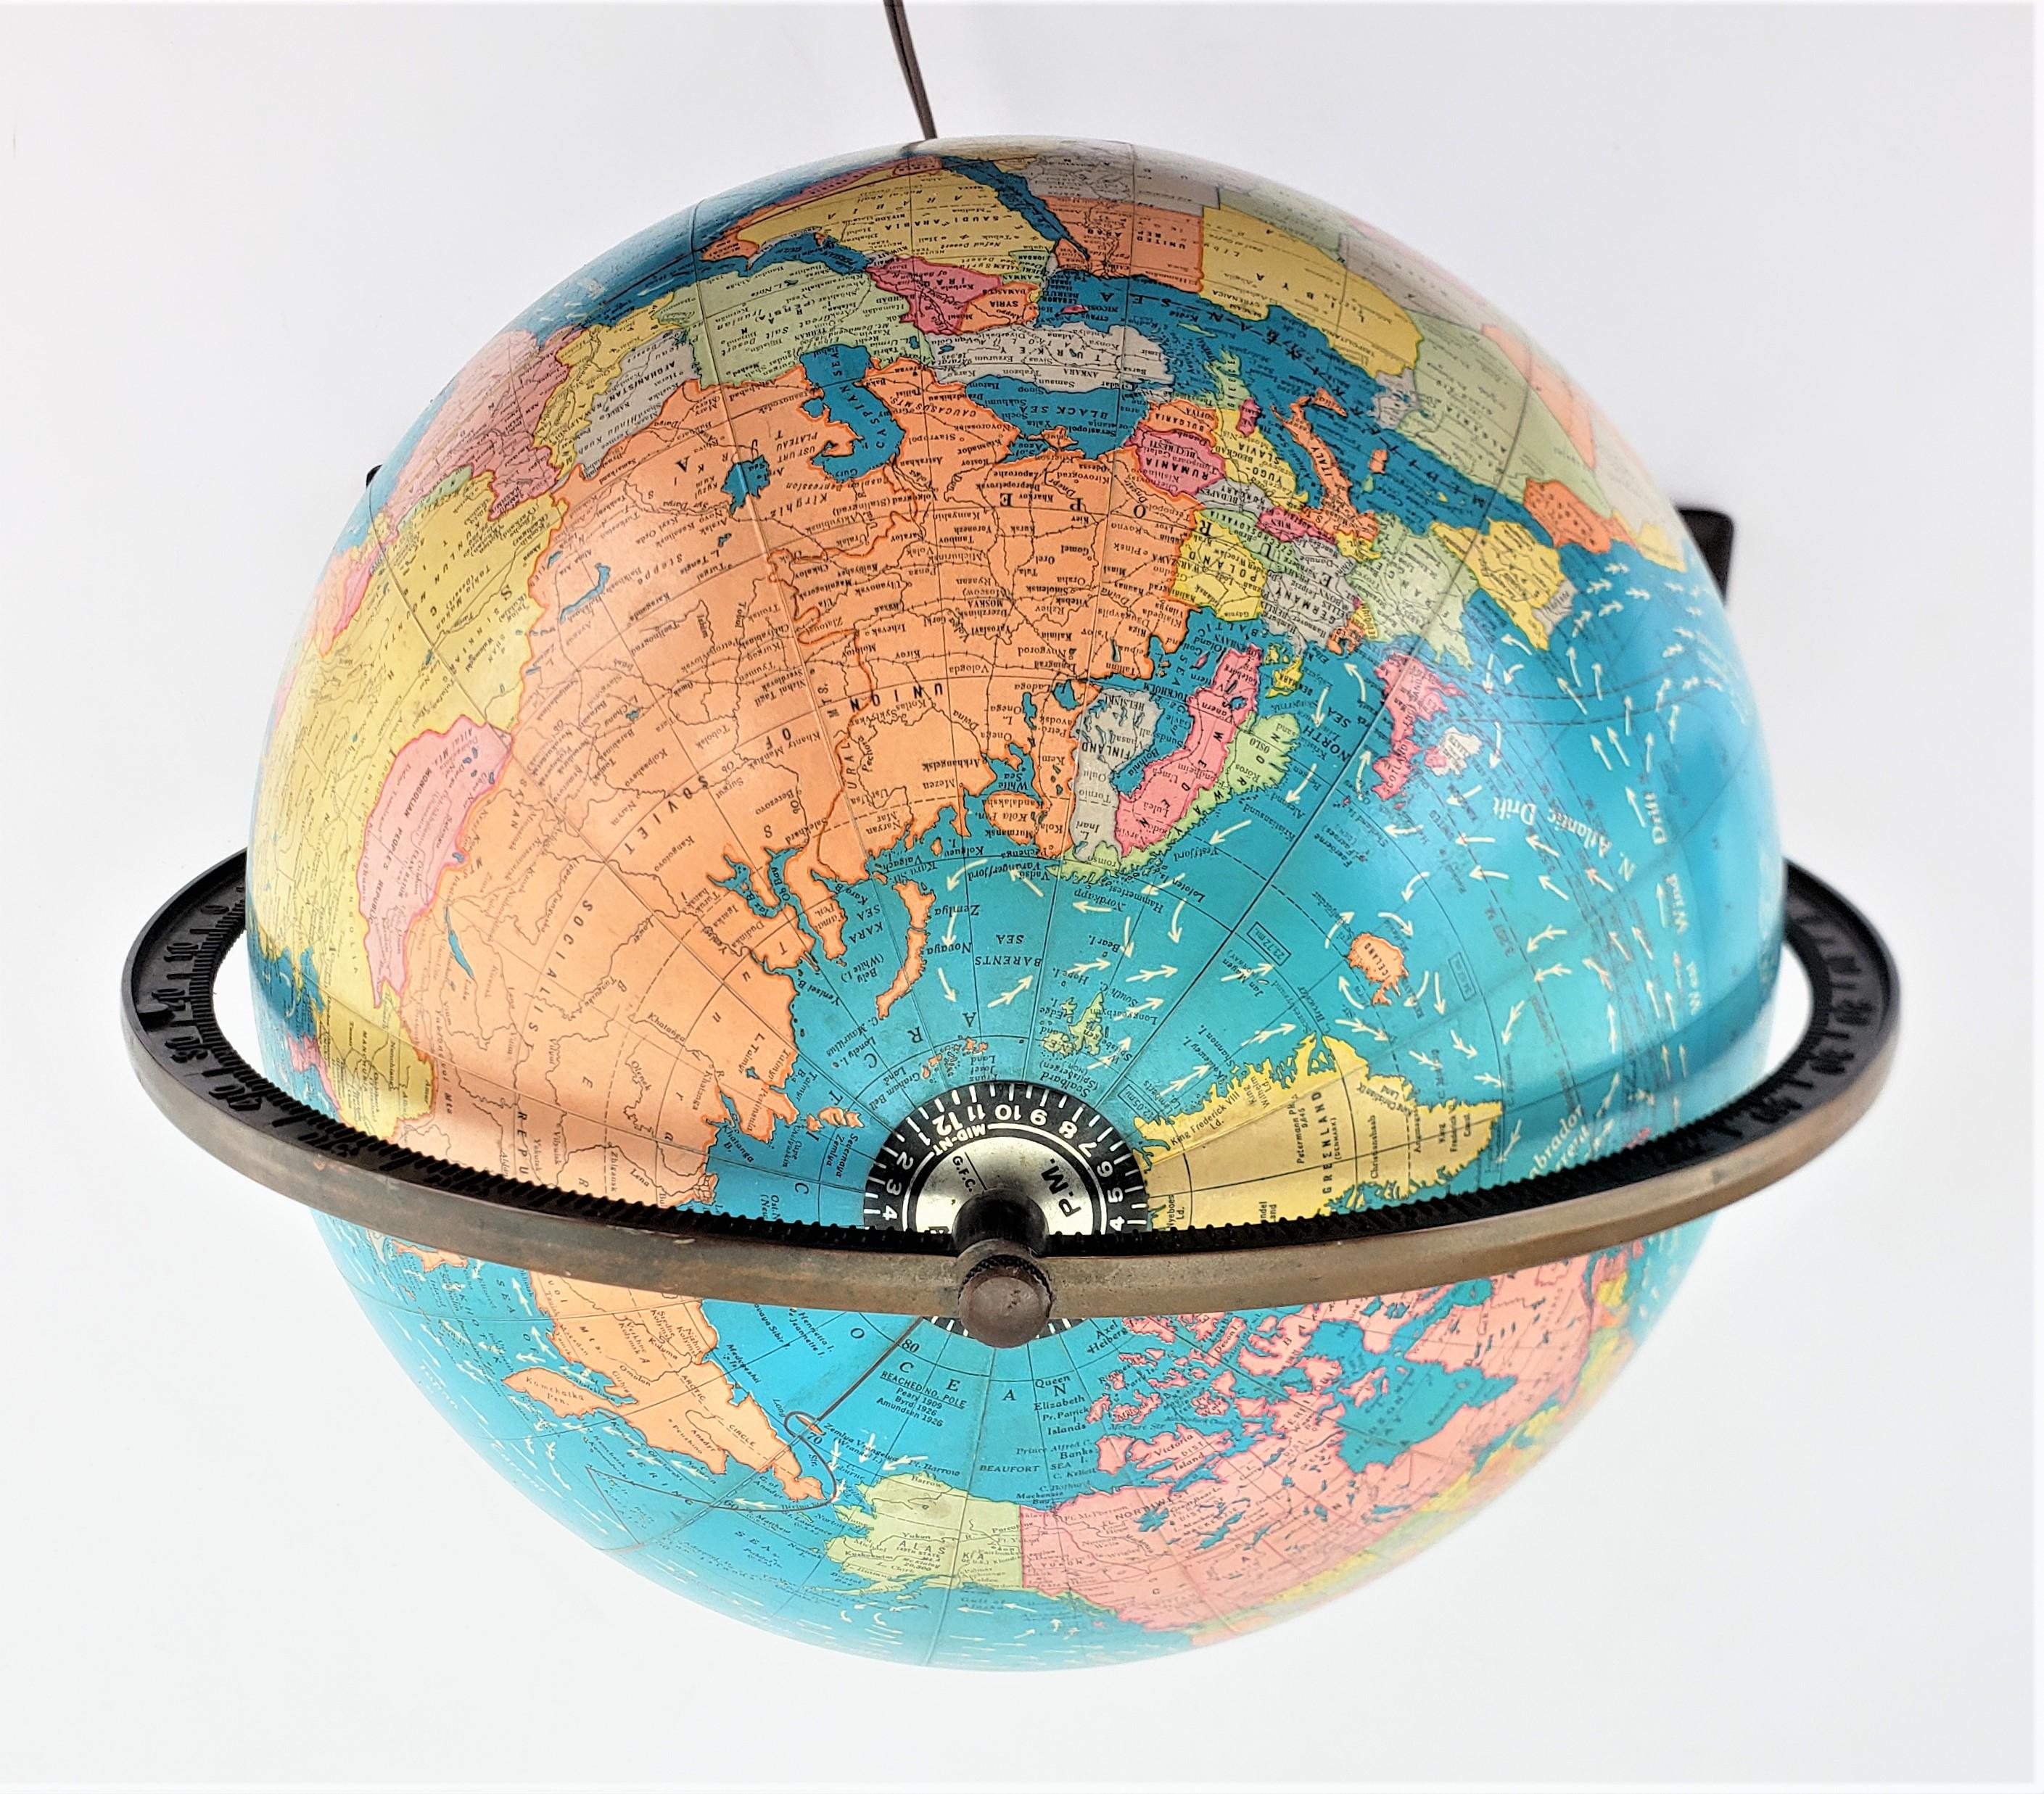 Vintage George F. Cram Co. Figural Brass Atlas Illuminated Terrestrial Globe 7